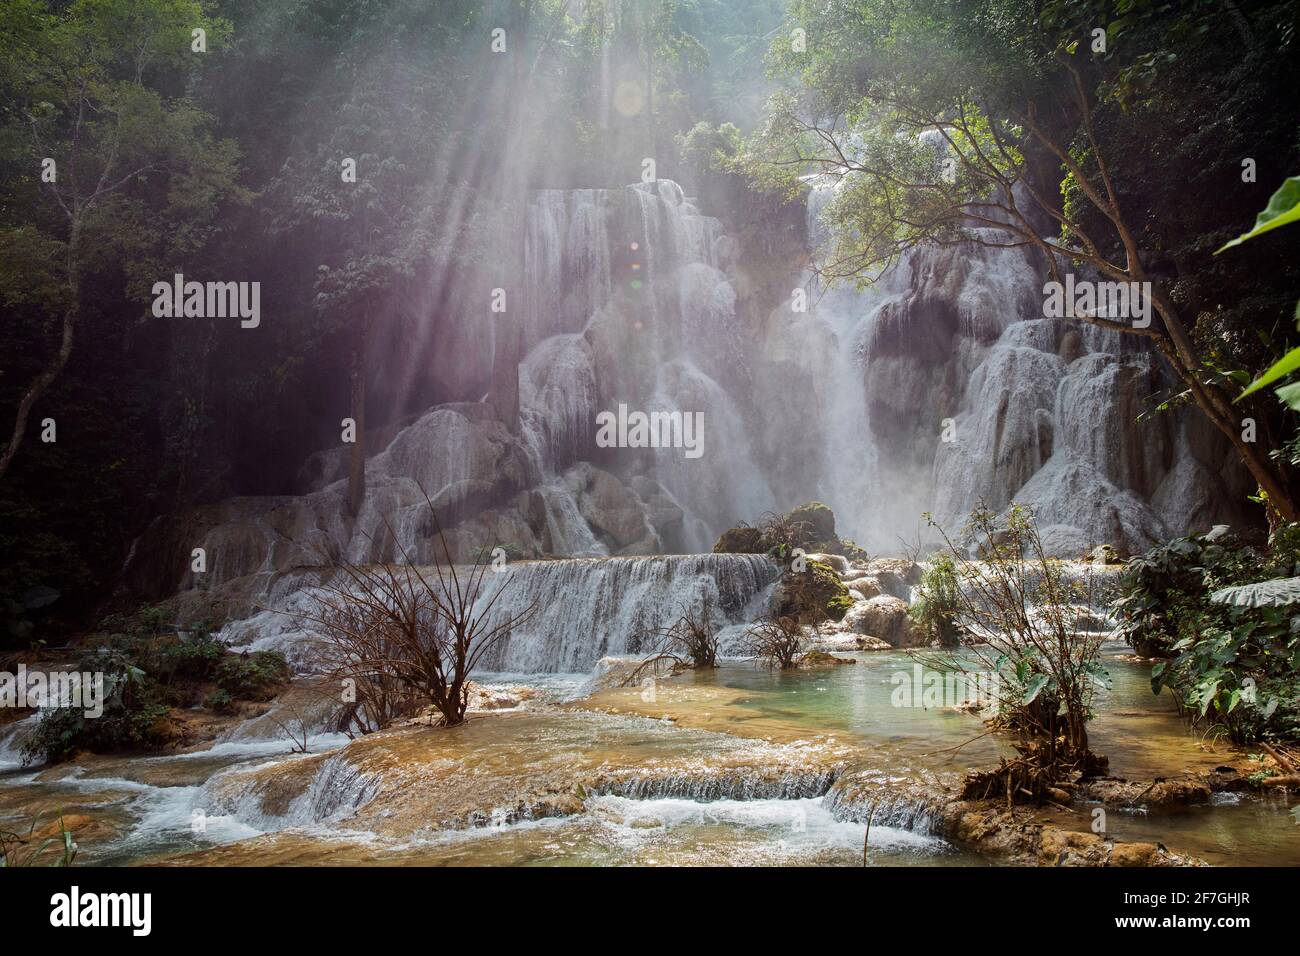 Kuang Si Falls / Kuang Xi Falls / Tat Kuang Si Wasserfälle im Dschungel bei Luang Phabang / Luang Prabang, Laos Stockfoto